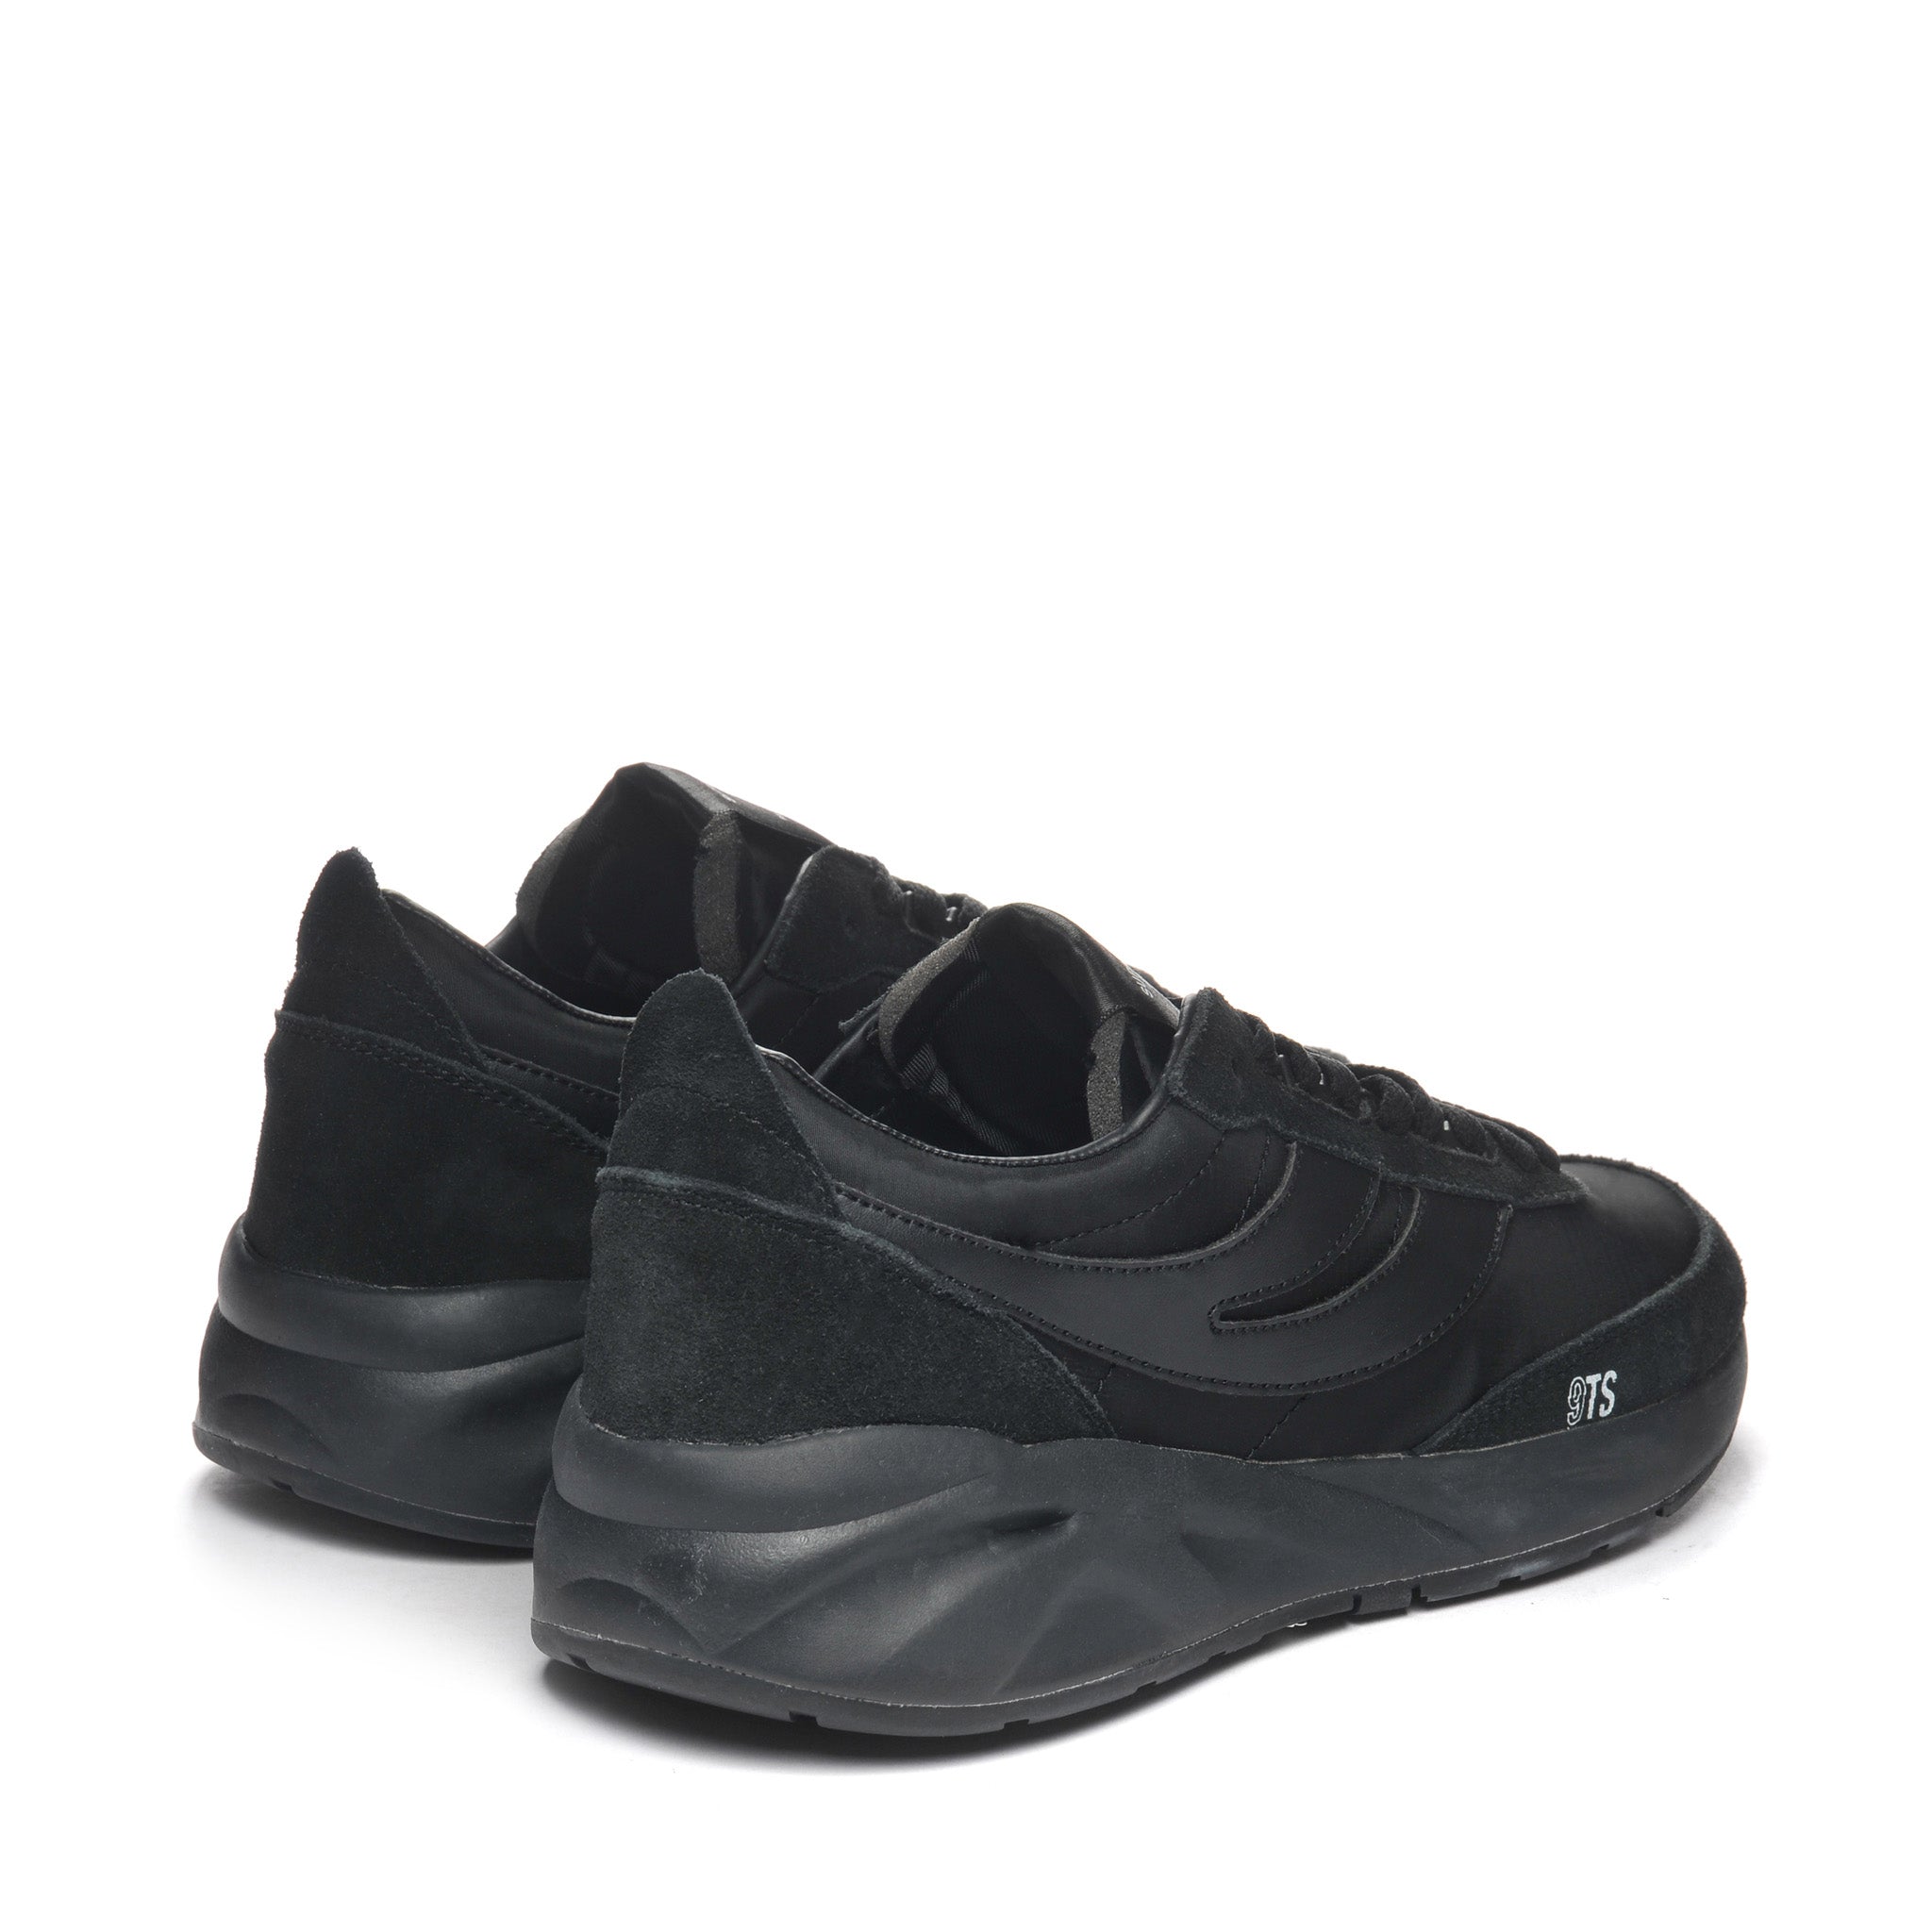 Superga 4089 Training 9Ts Slim Sneakers - Black. Back view.